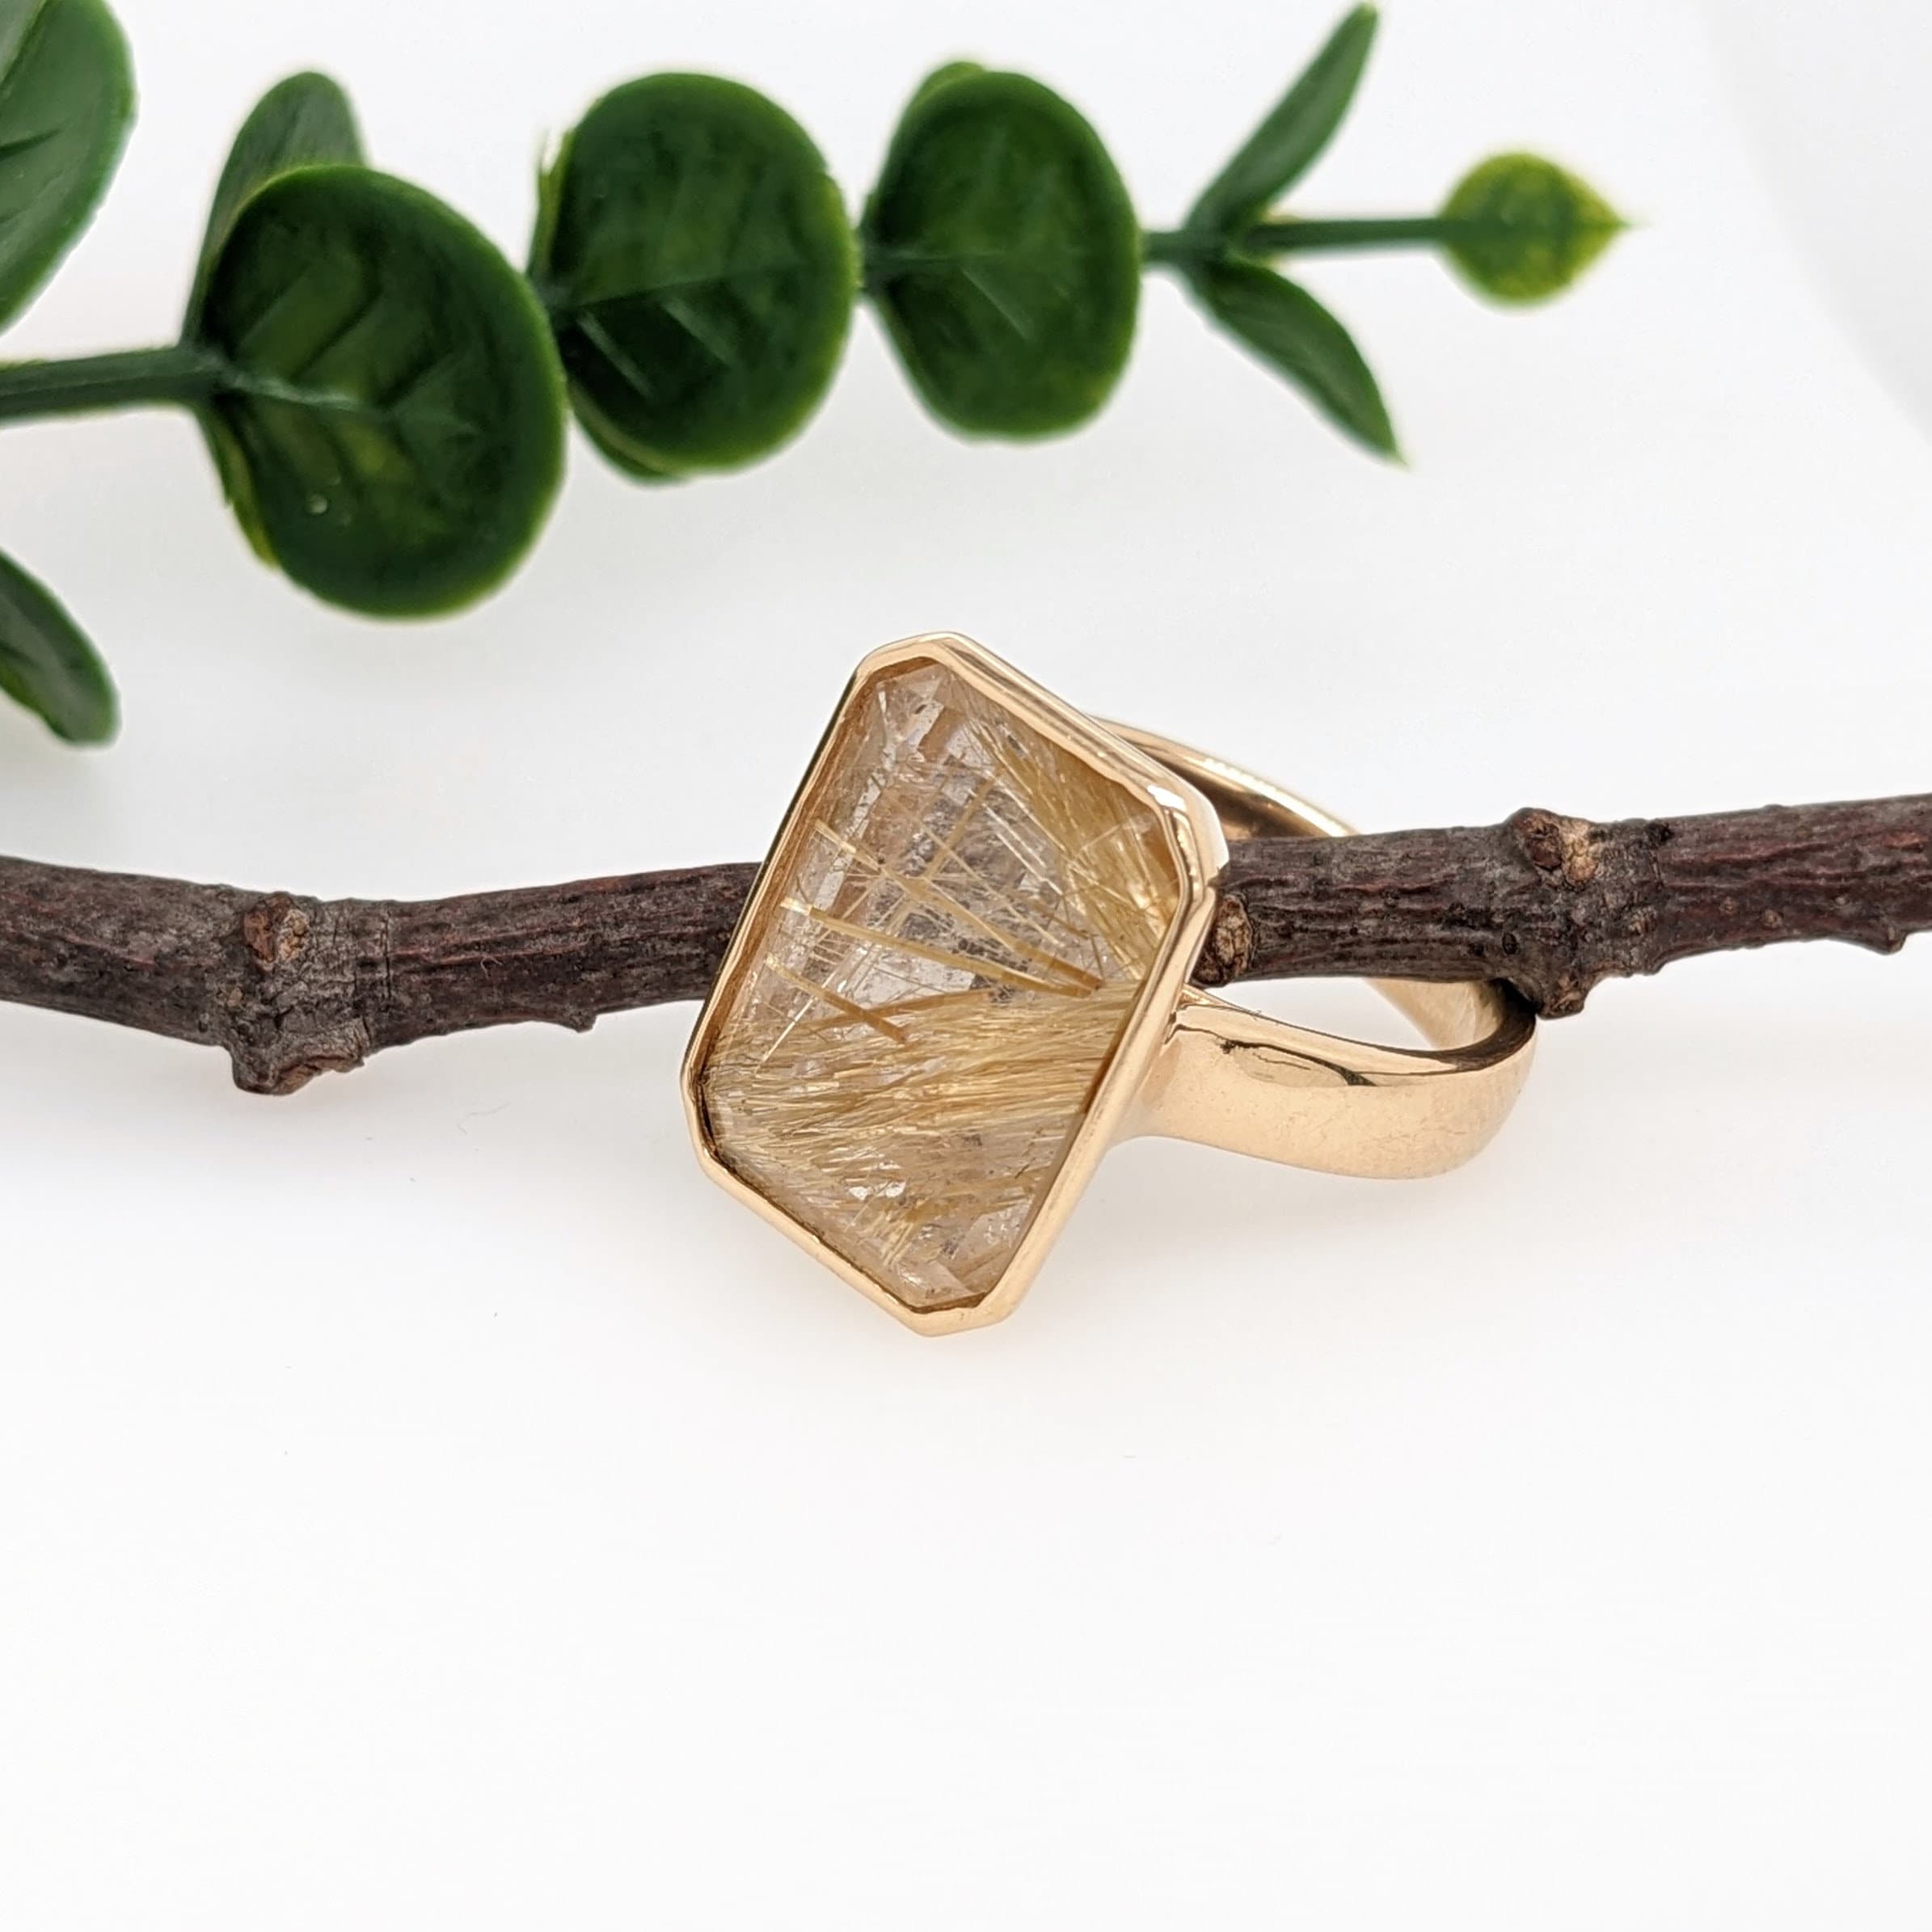 Classic Golden Rutile Quartz Ring in 18K Yellow Gold | Emerald 17x11mm | Solitaire Ring | April Birthstone | Custom